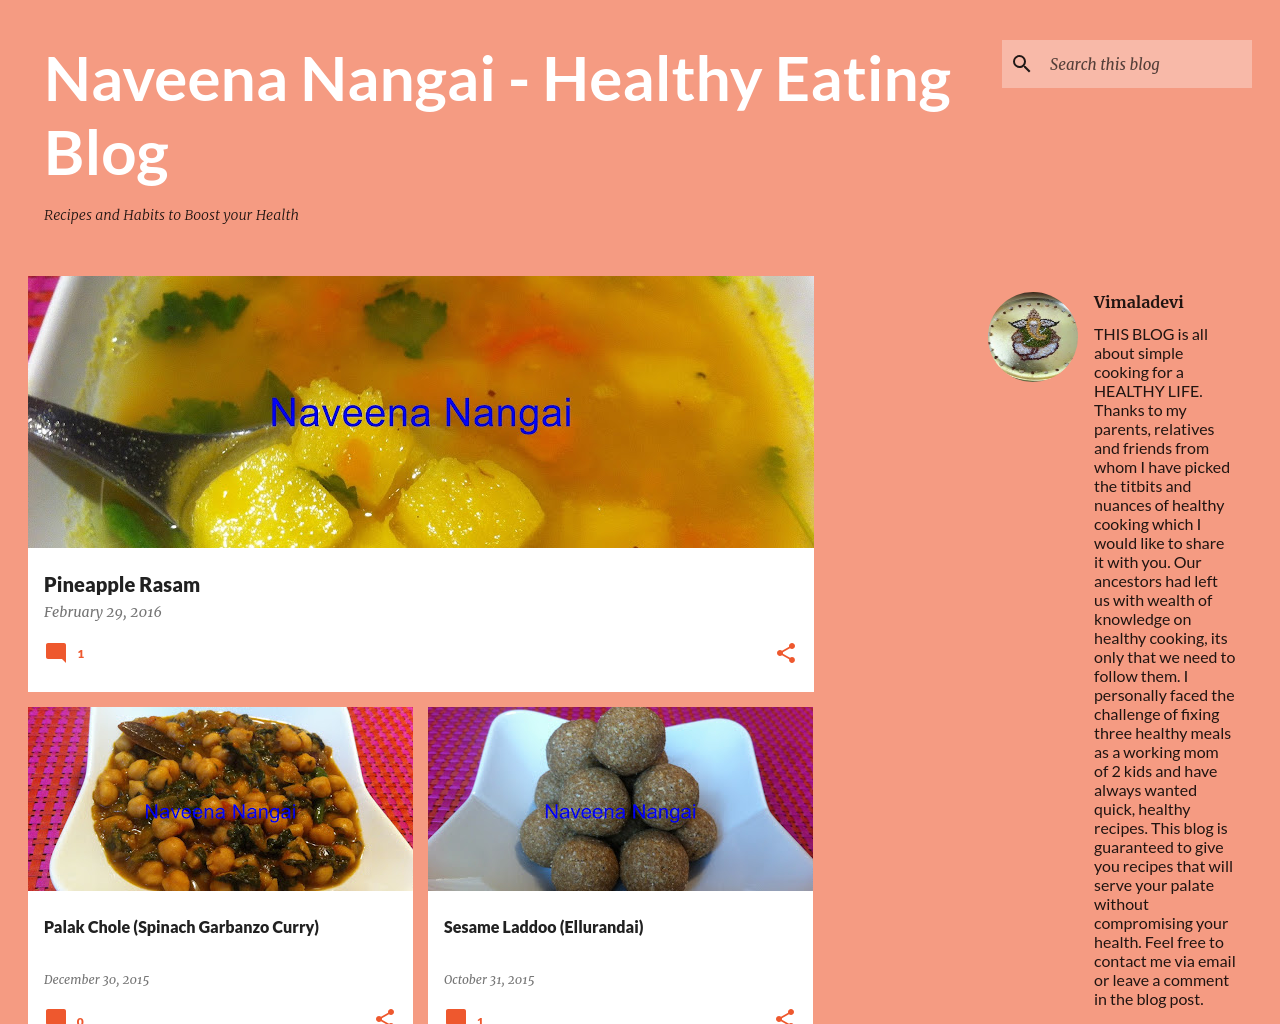 Naveena Nangai - Healthy Eating Blog